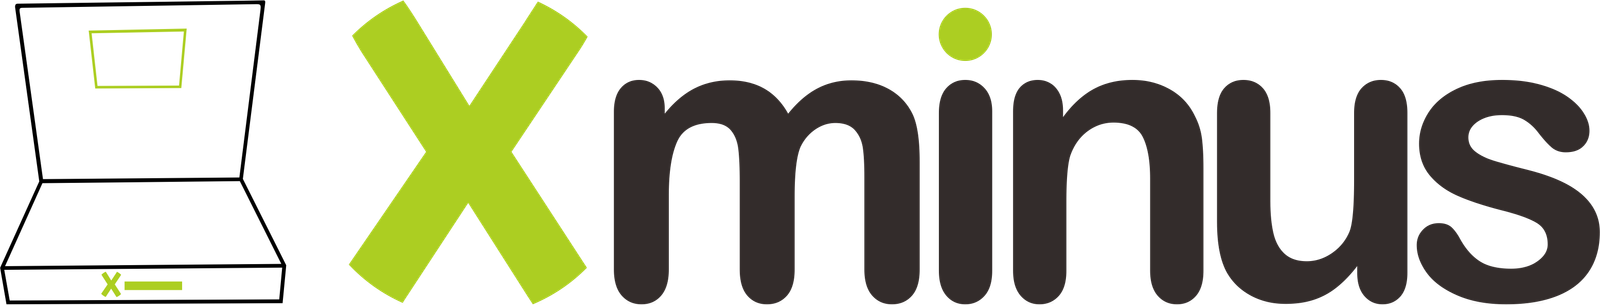 xminus logo